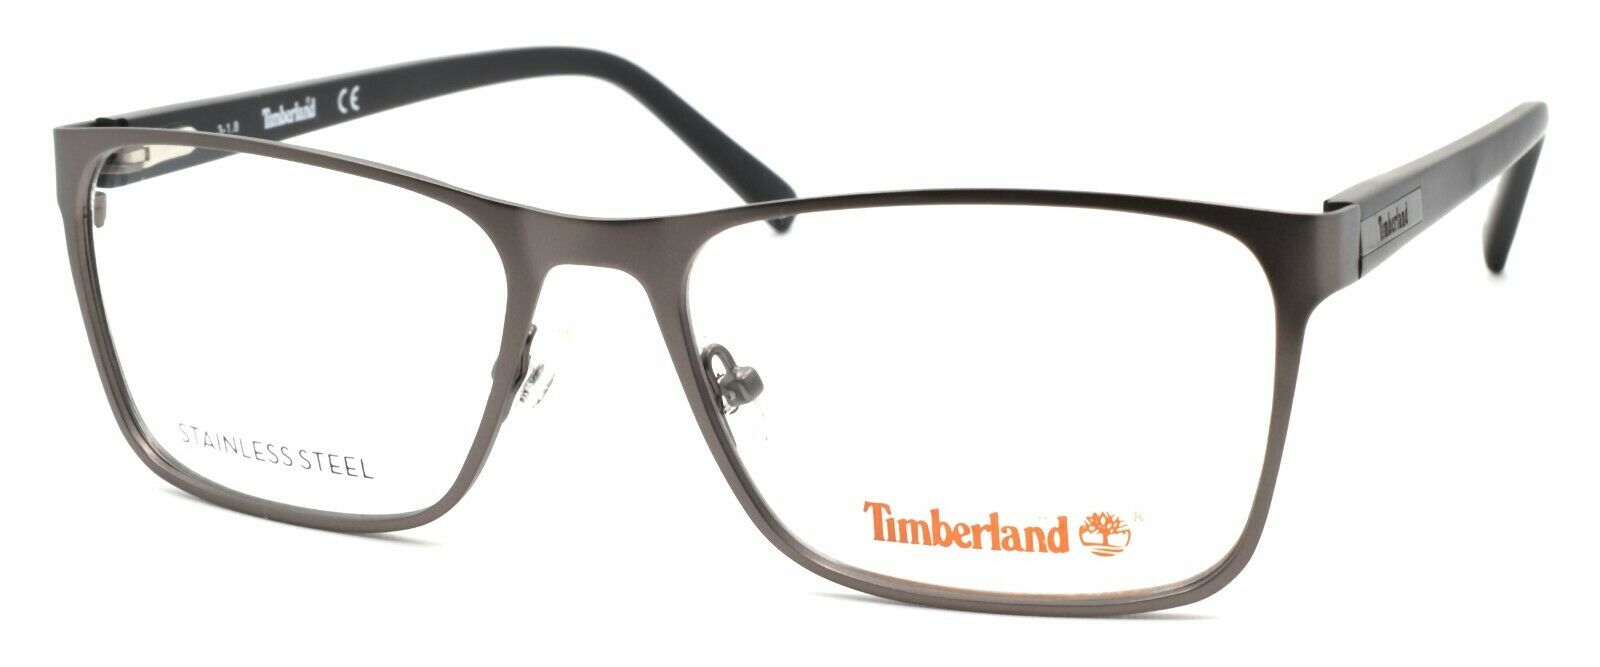 1-TIMBERLAND TB1578 009 Men's Eyeglasses Frames 55-17-145 Gunmetal + CASE-664689912827-IKSpecs